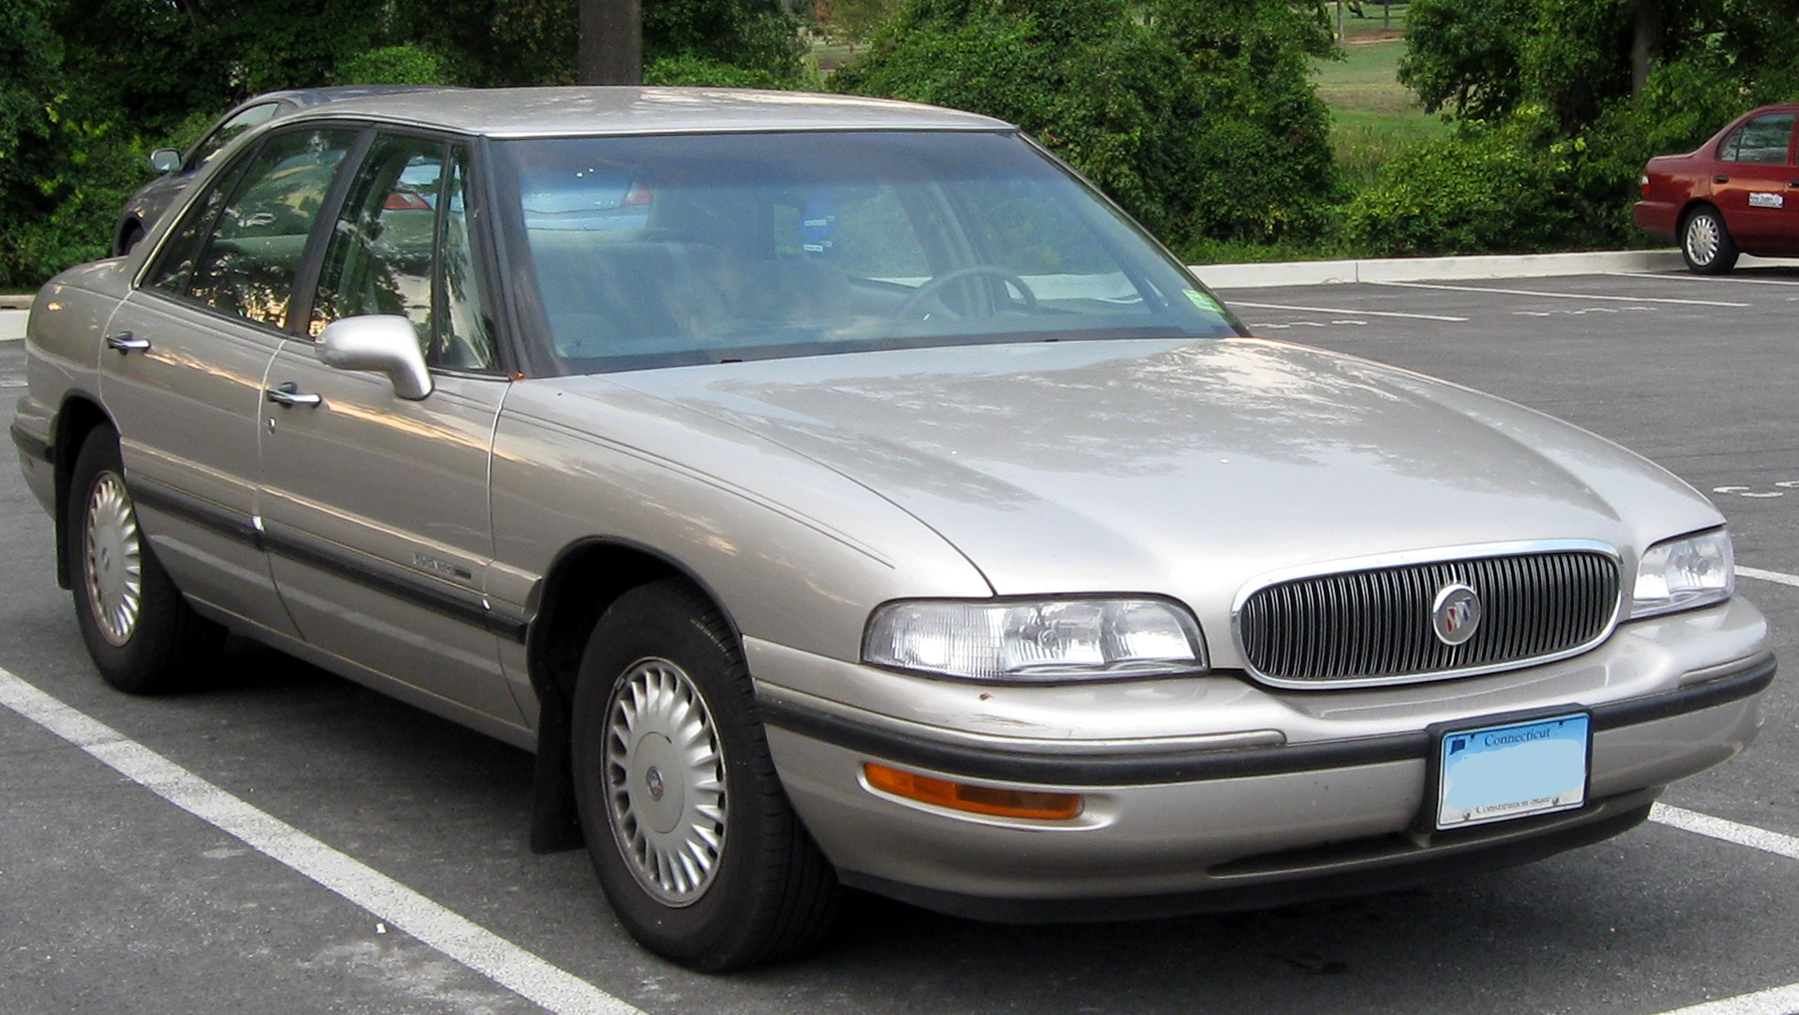 File:1997-1999 Buick LeSabre -- 09-22-2010 2.jpg - Wikimedia Commons